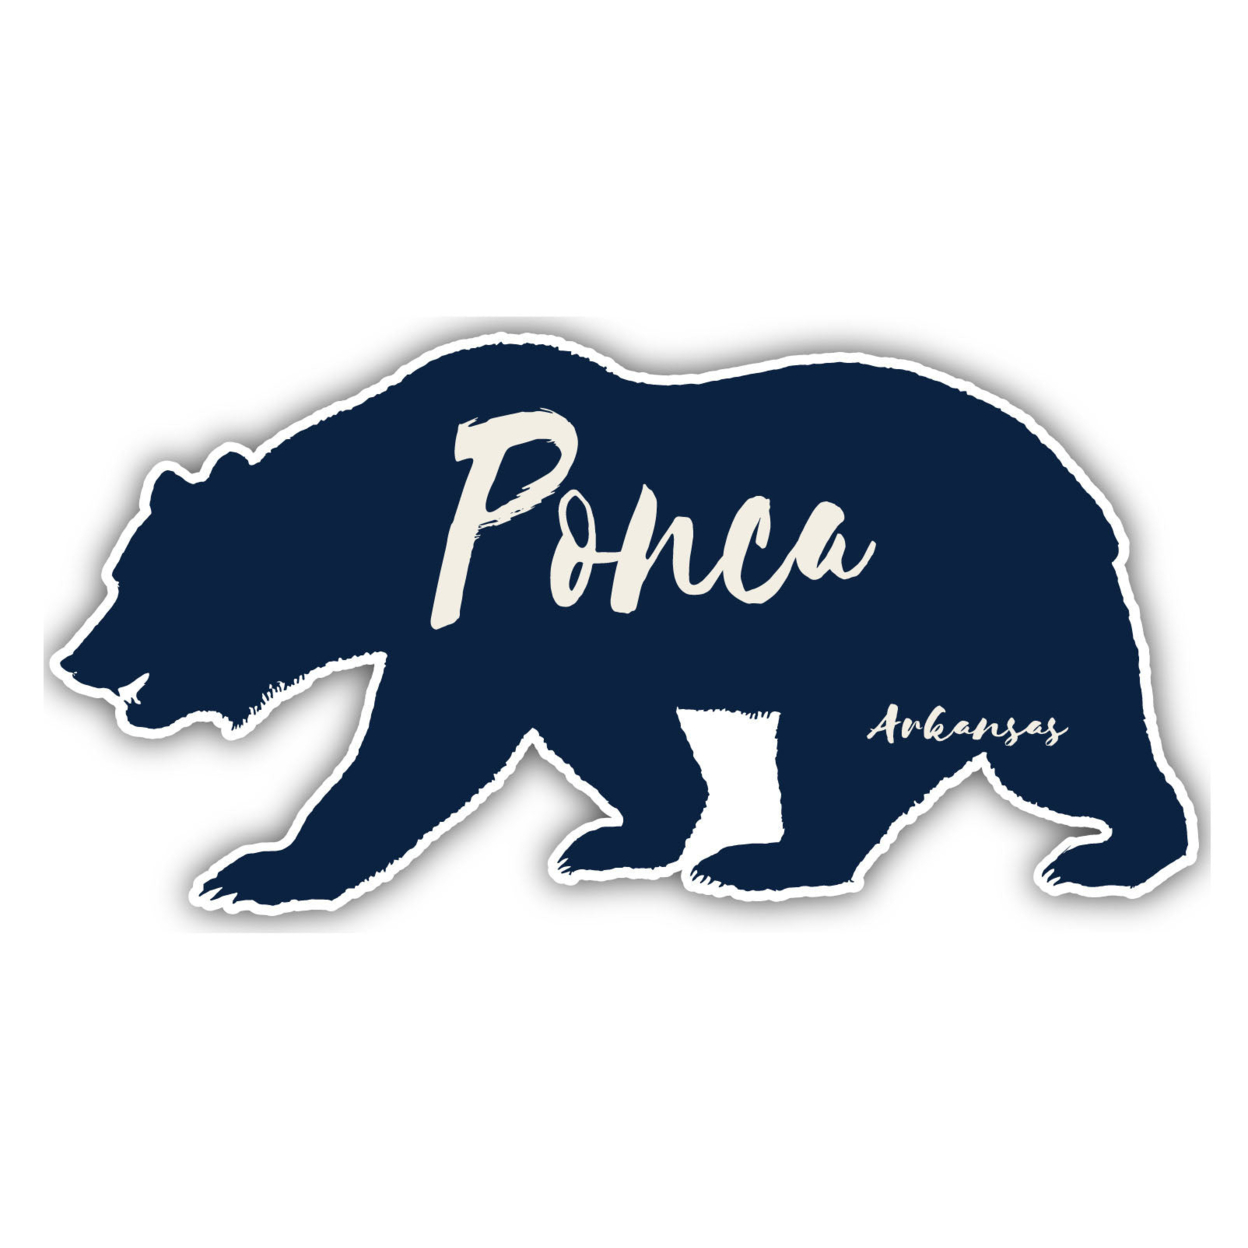 Ponca Arkansas Souvenir Decorative Stickers (Choose Theme And Size) - Single Unit, 2-Inch, Bear